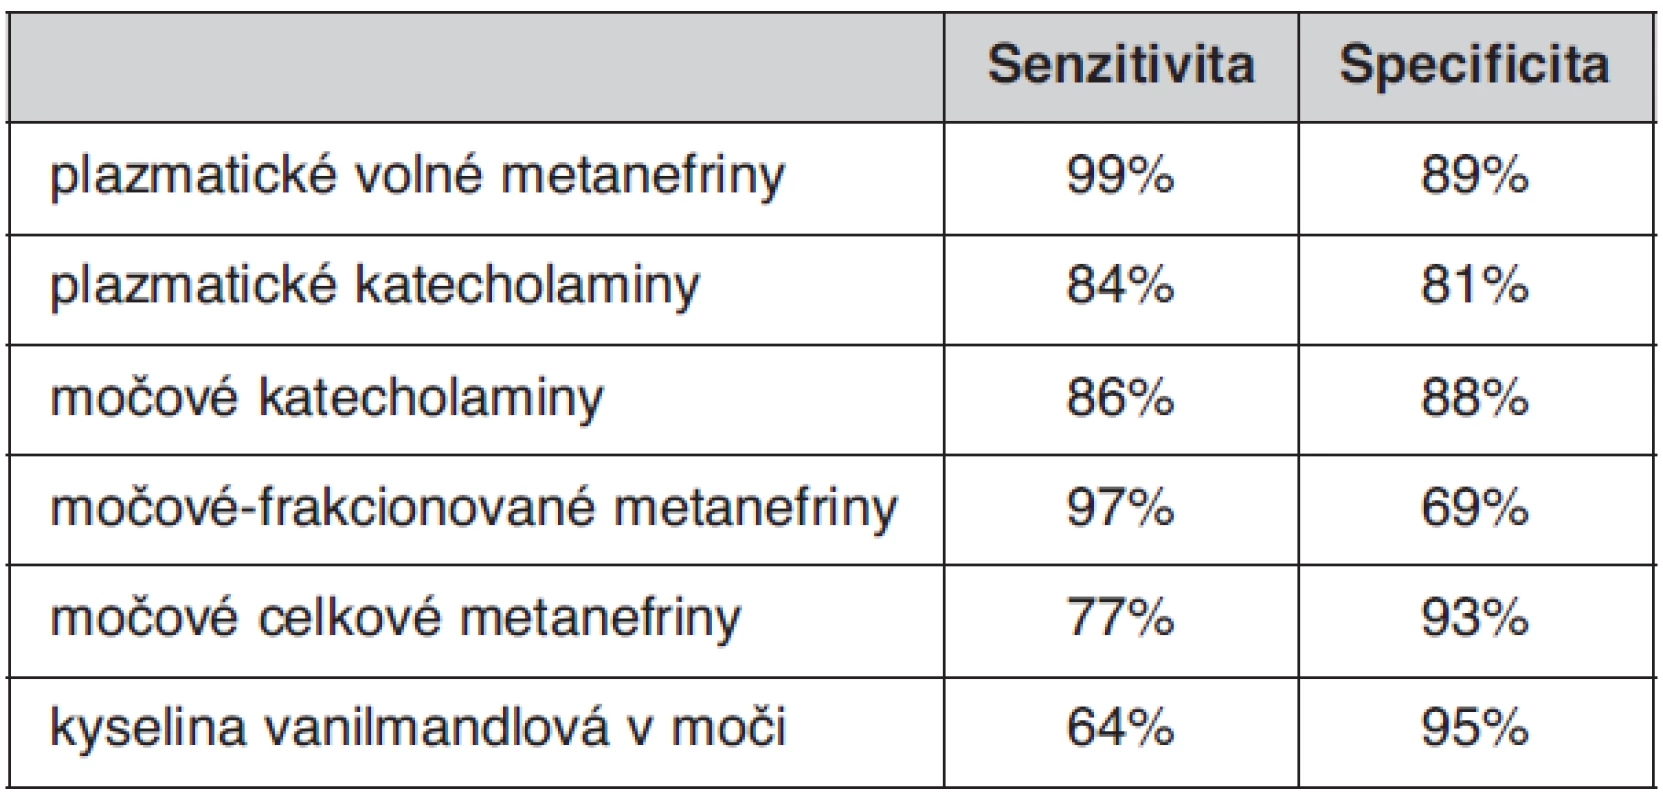 Senzitivita a specificita biochemických testů používaných pro diagnostiku feo (11)